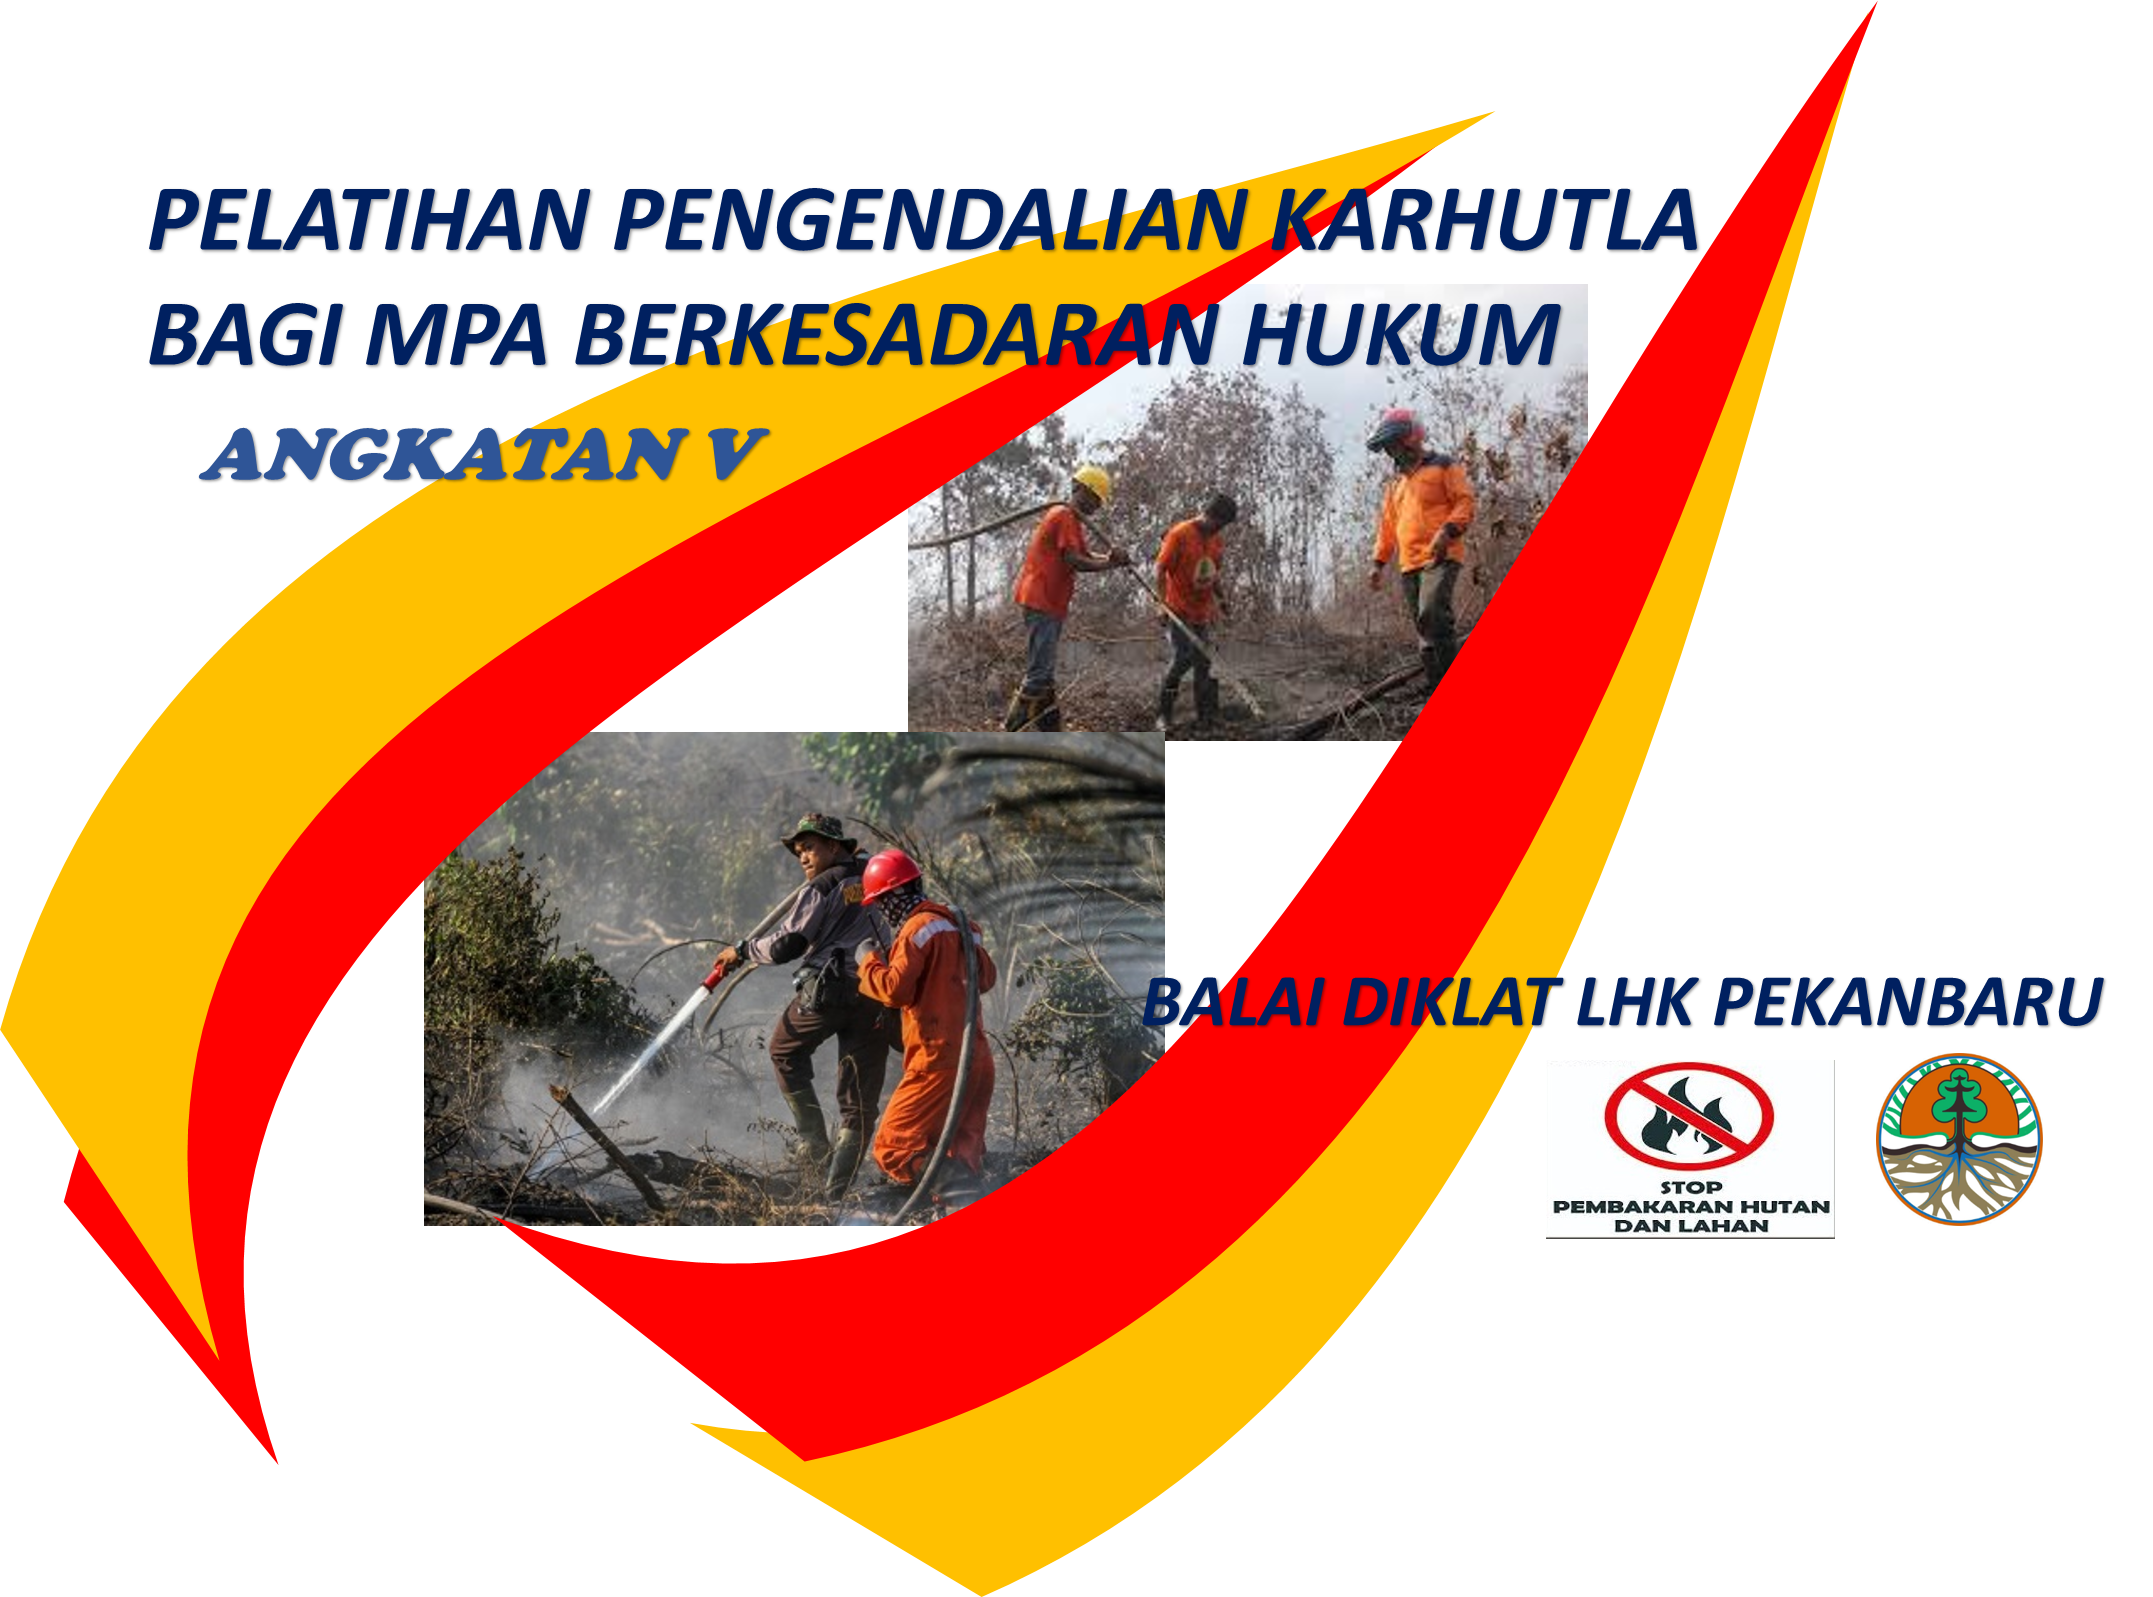 Pelatihan Pengendalian Kebakaran Hutan Dan Lahan  Bagi Masyarakat Peduli Api (MPA) Berkesadaran Hukum Angk. V di BDLHK Pekanbaru